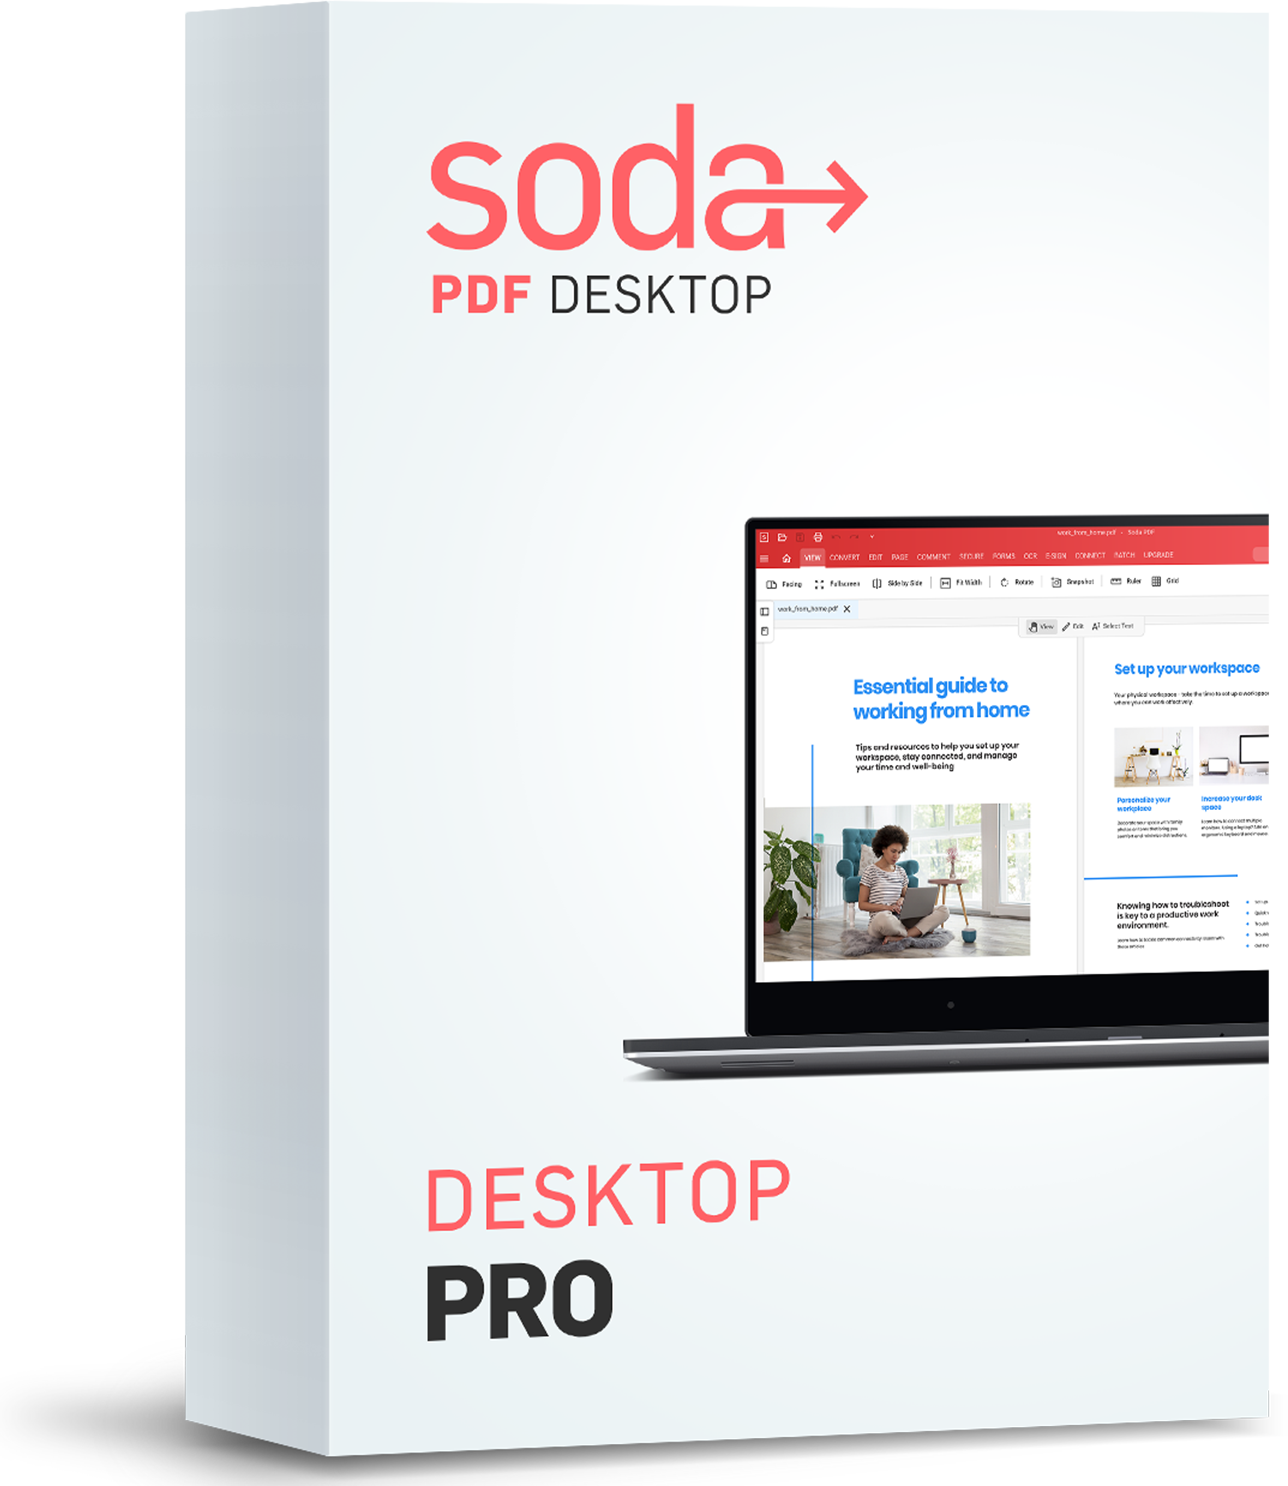 download the new version for ios Soda PDF Desktop Pro 14.0.351.21216